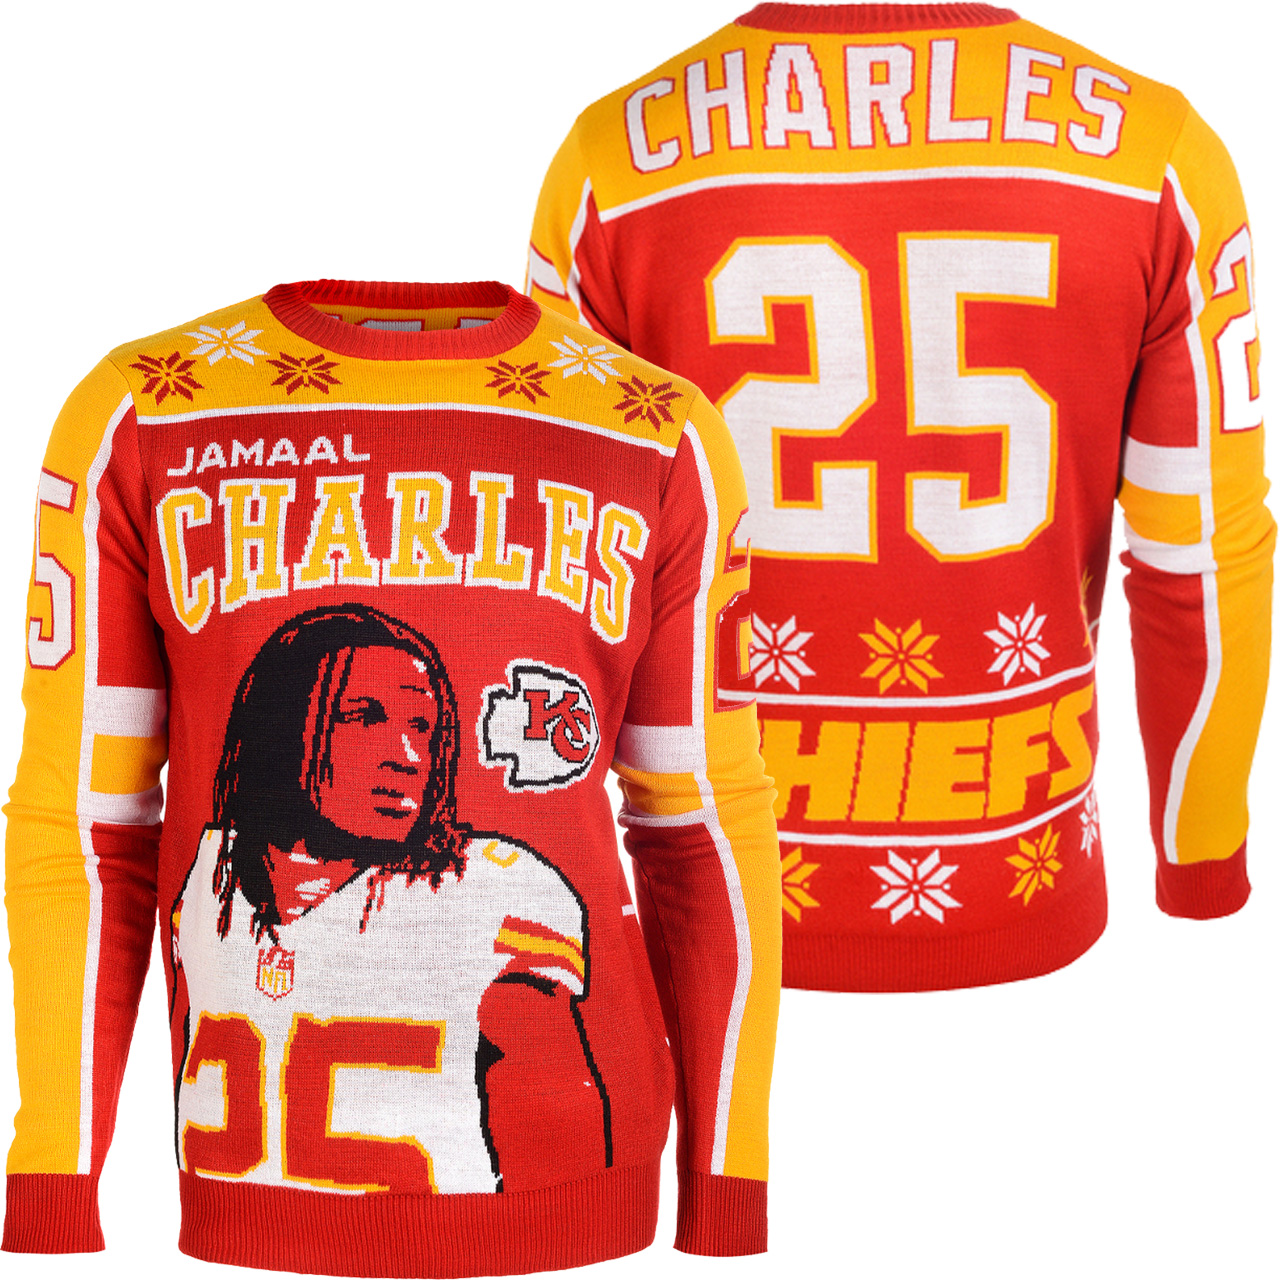 Jamal Charles #25 Kansas City Chiefs NFL Player Ugly Sweater